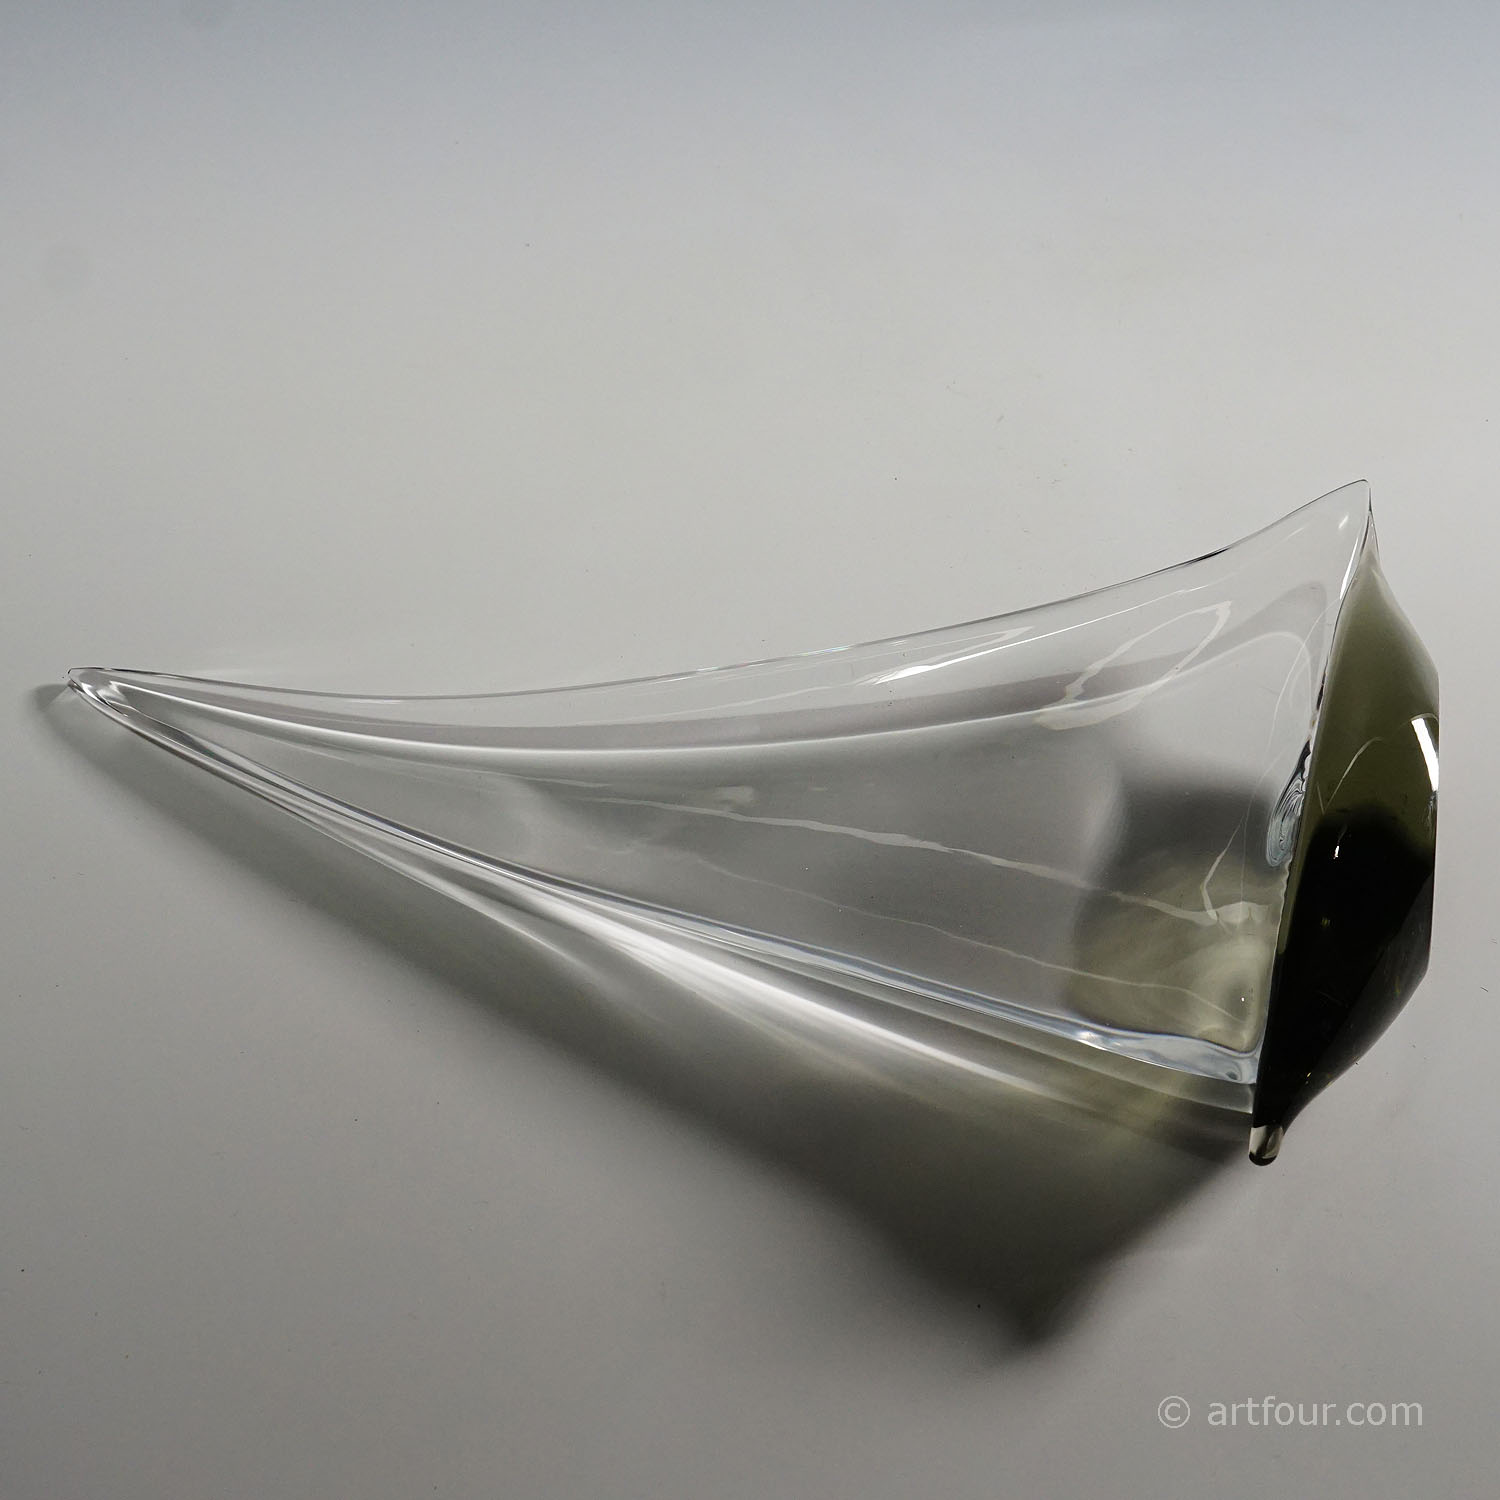 Glass Sculpture of a Sailboat Designed by Livio Seguso ca. 1970s